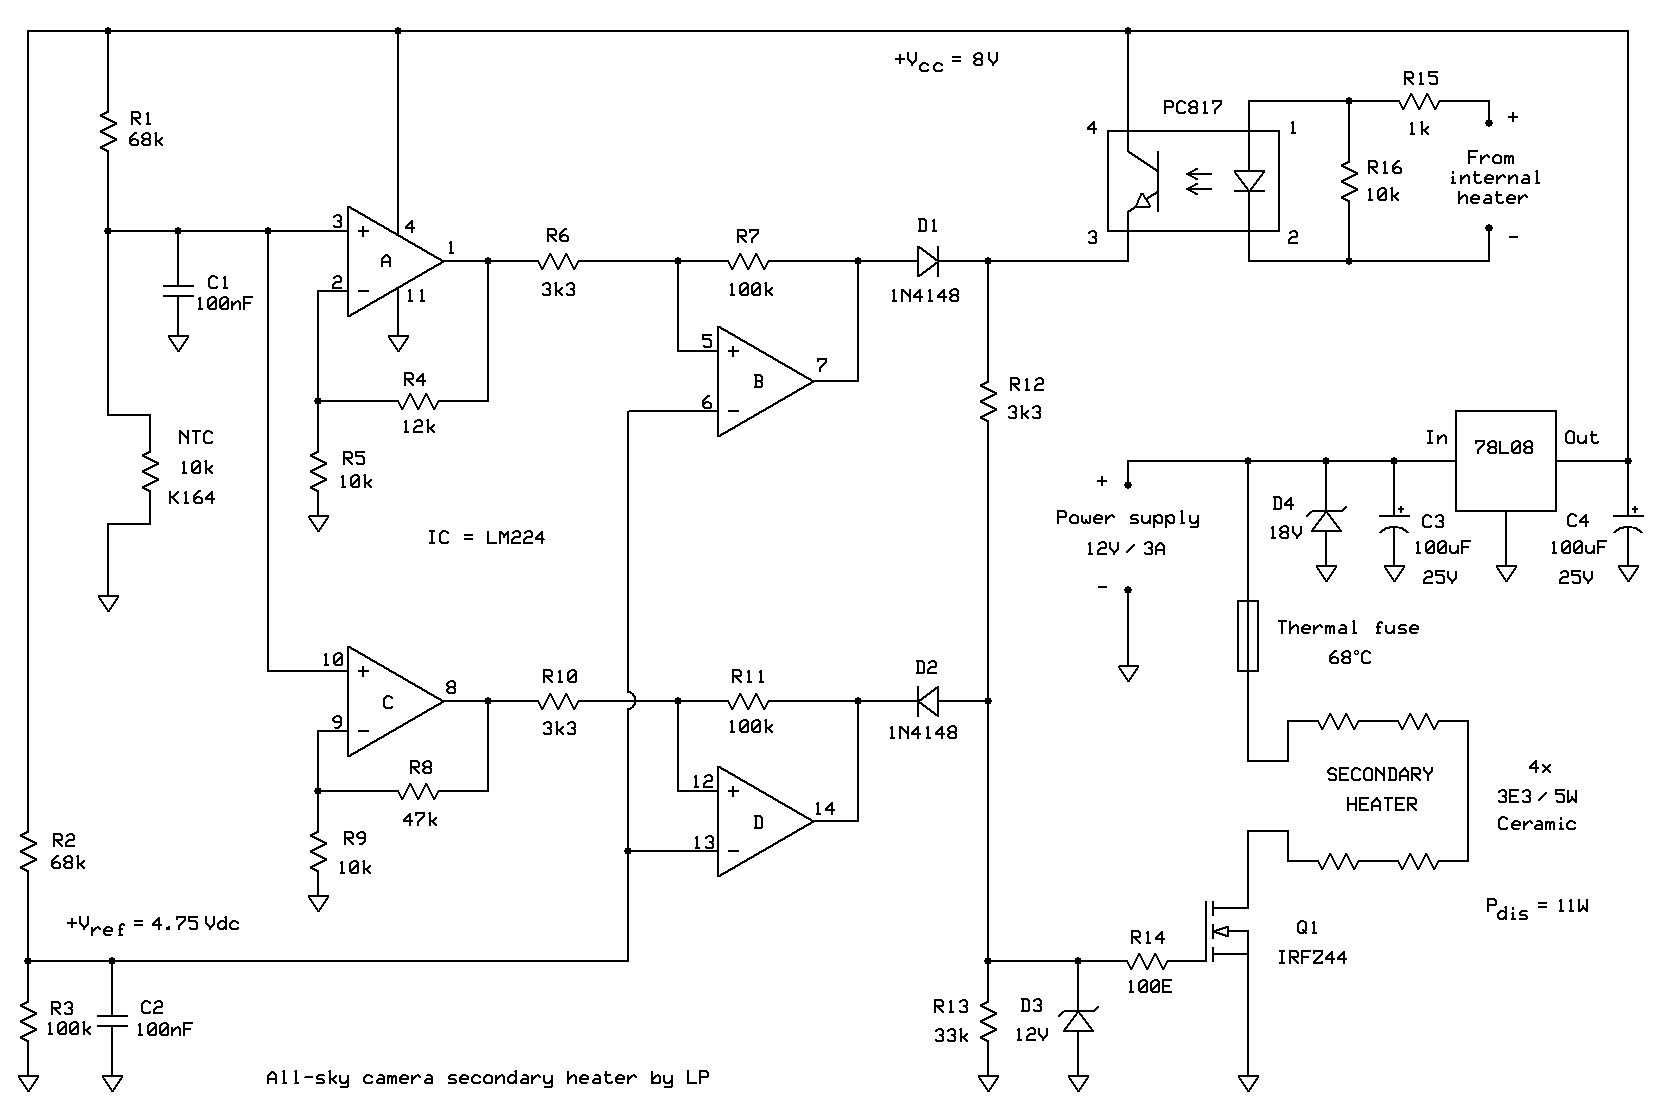 All-sky camera secondary heater circuit diagram